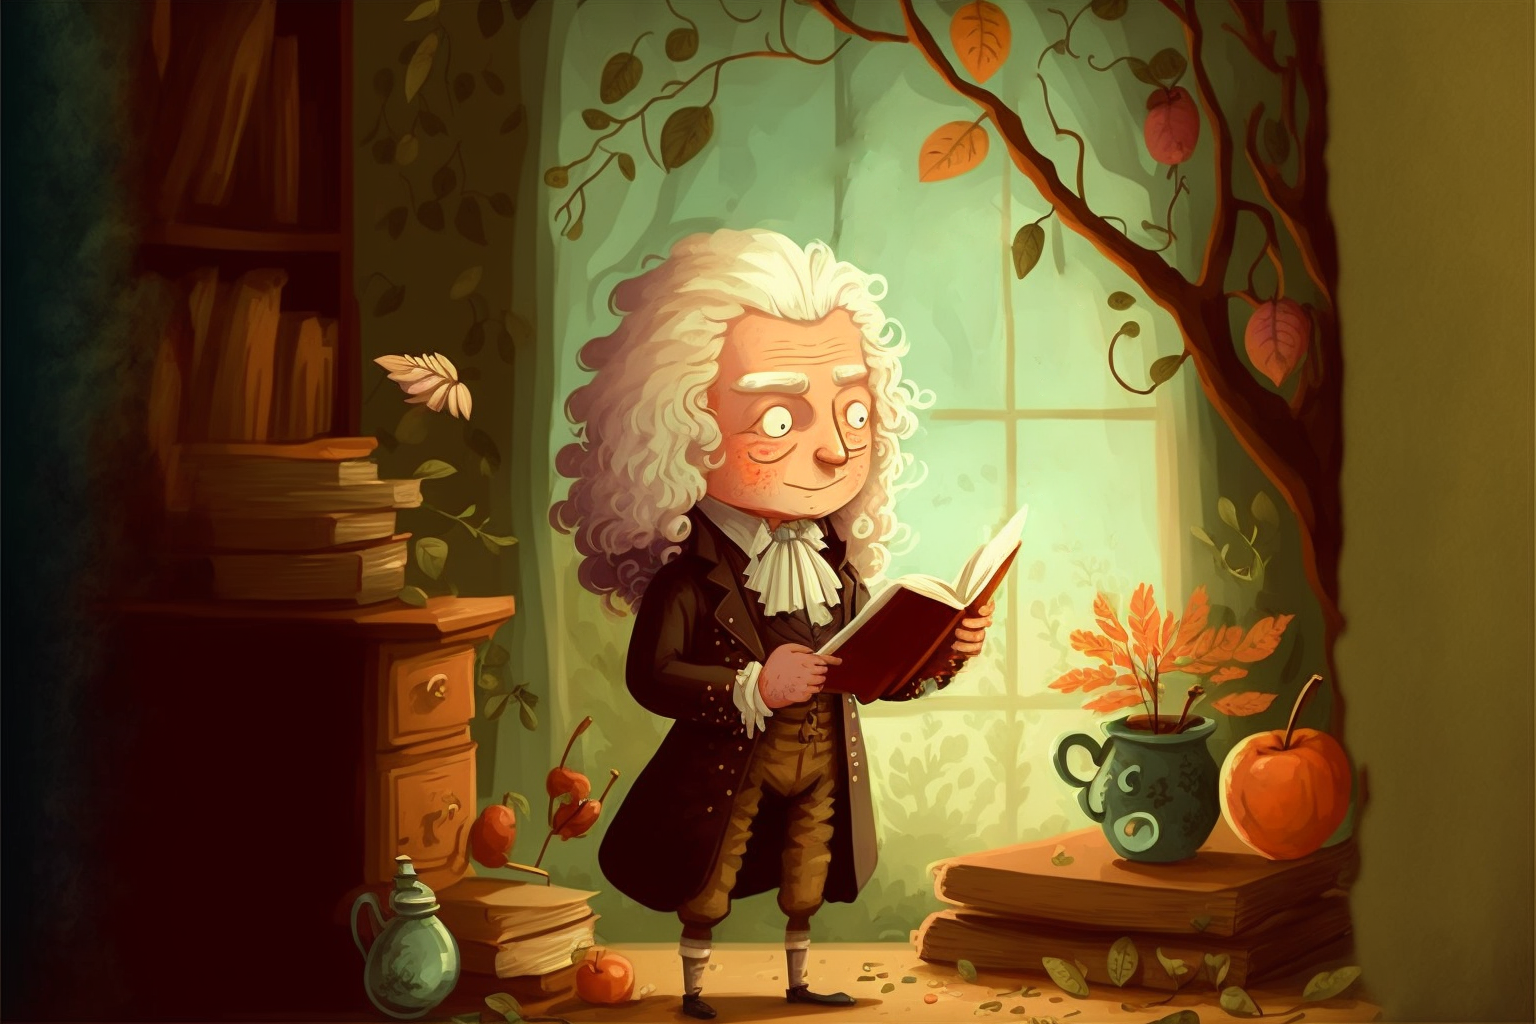 Sir Isaac Newton's Story